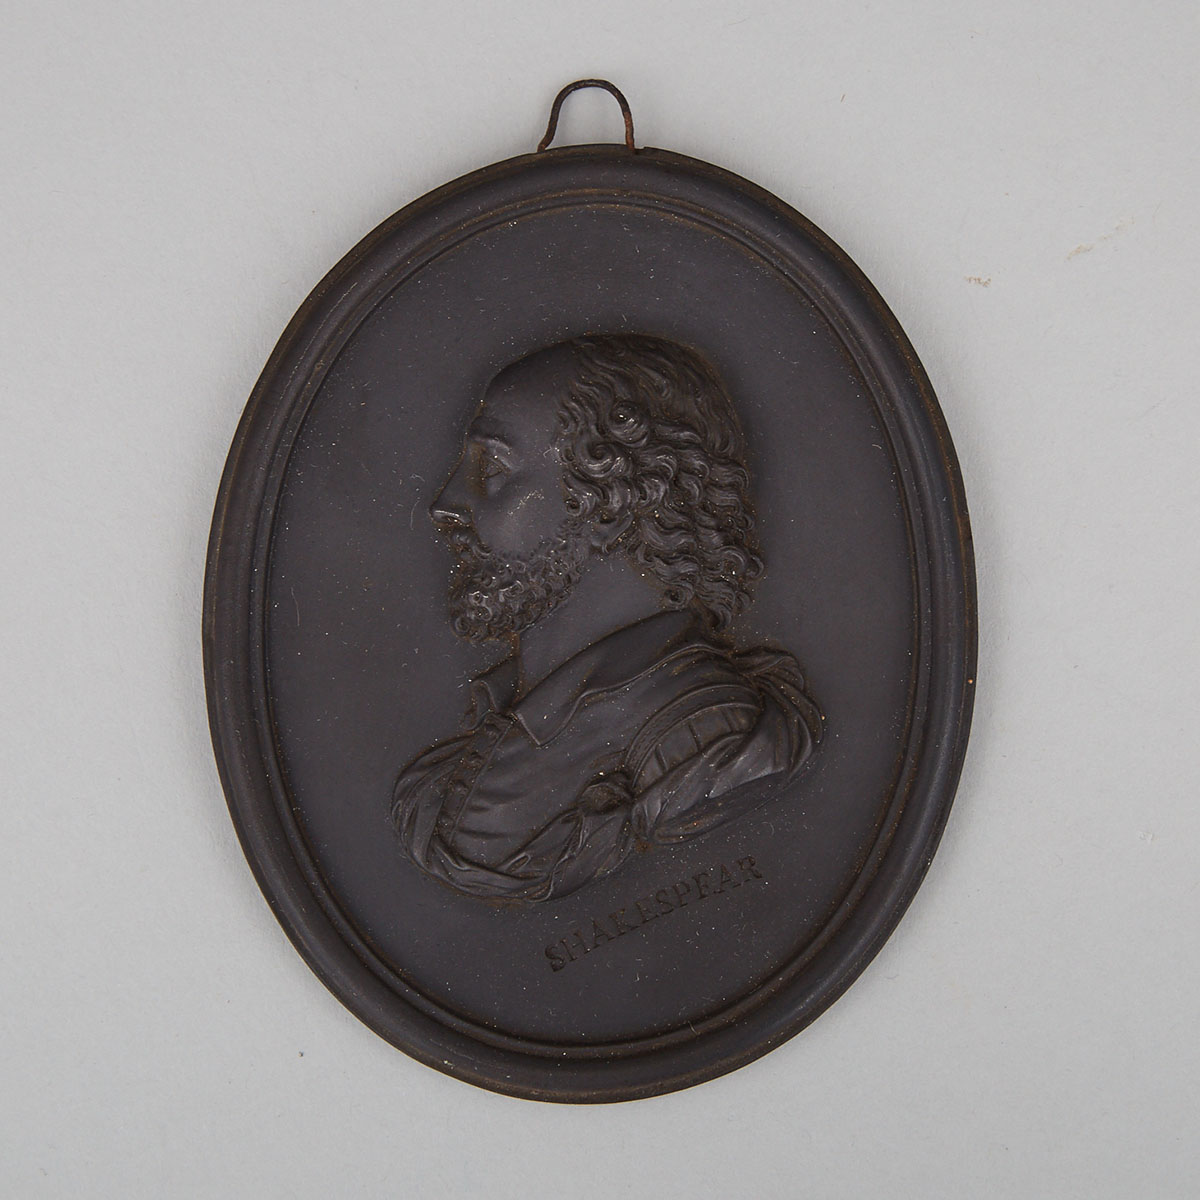 Wedgwood & Bentley Black Basalt Oval Portrait Medallion of William Shakespeare, c.1780